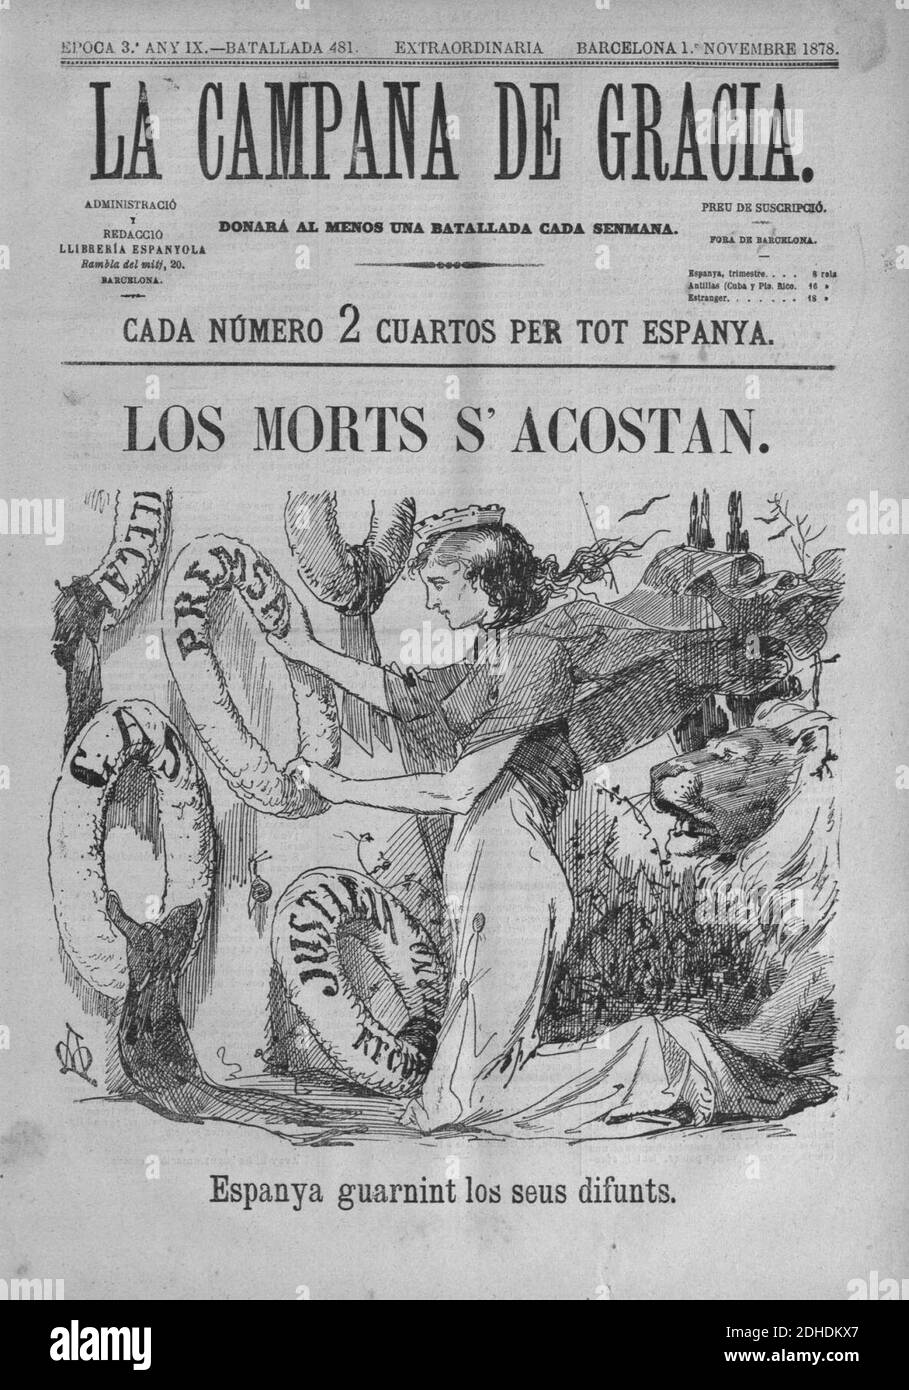 La Campana de Gracia, 01-11-1878 Stock Photo - Alamy